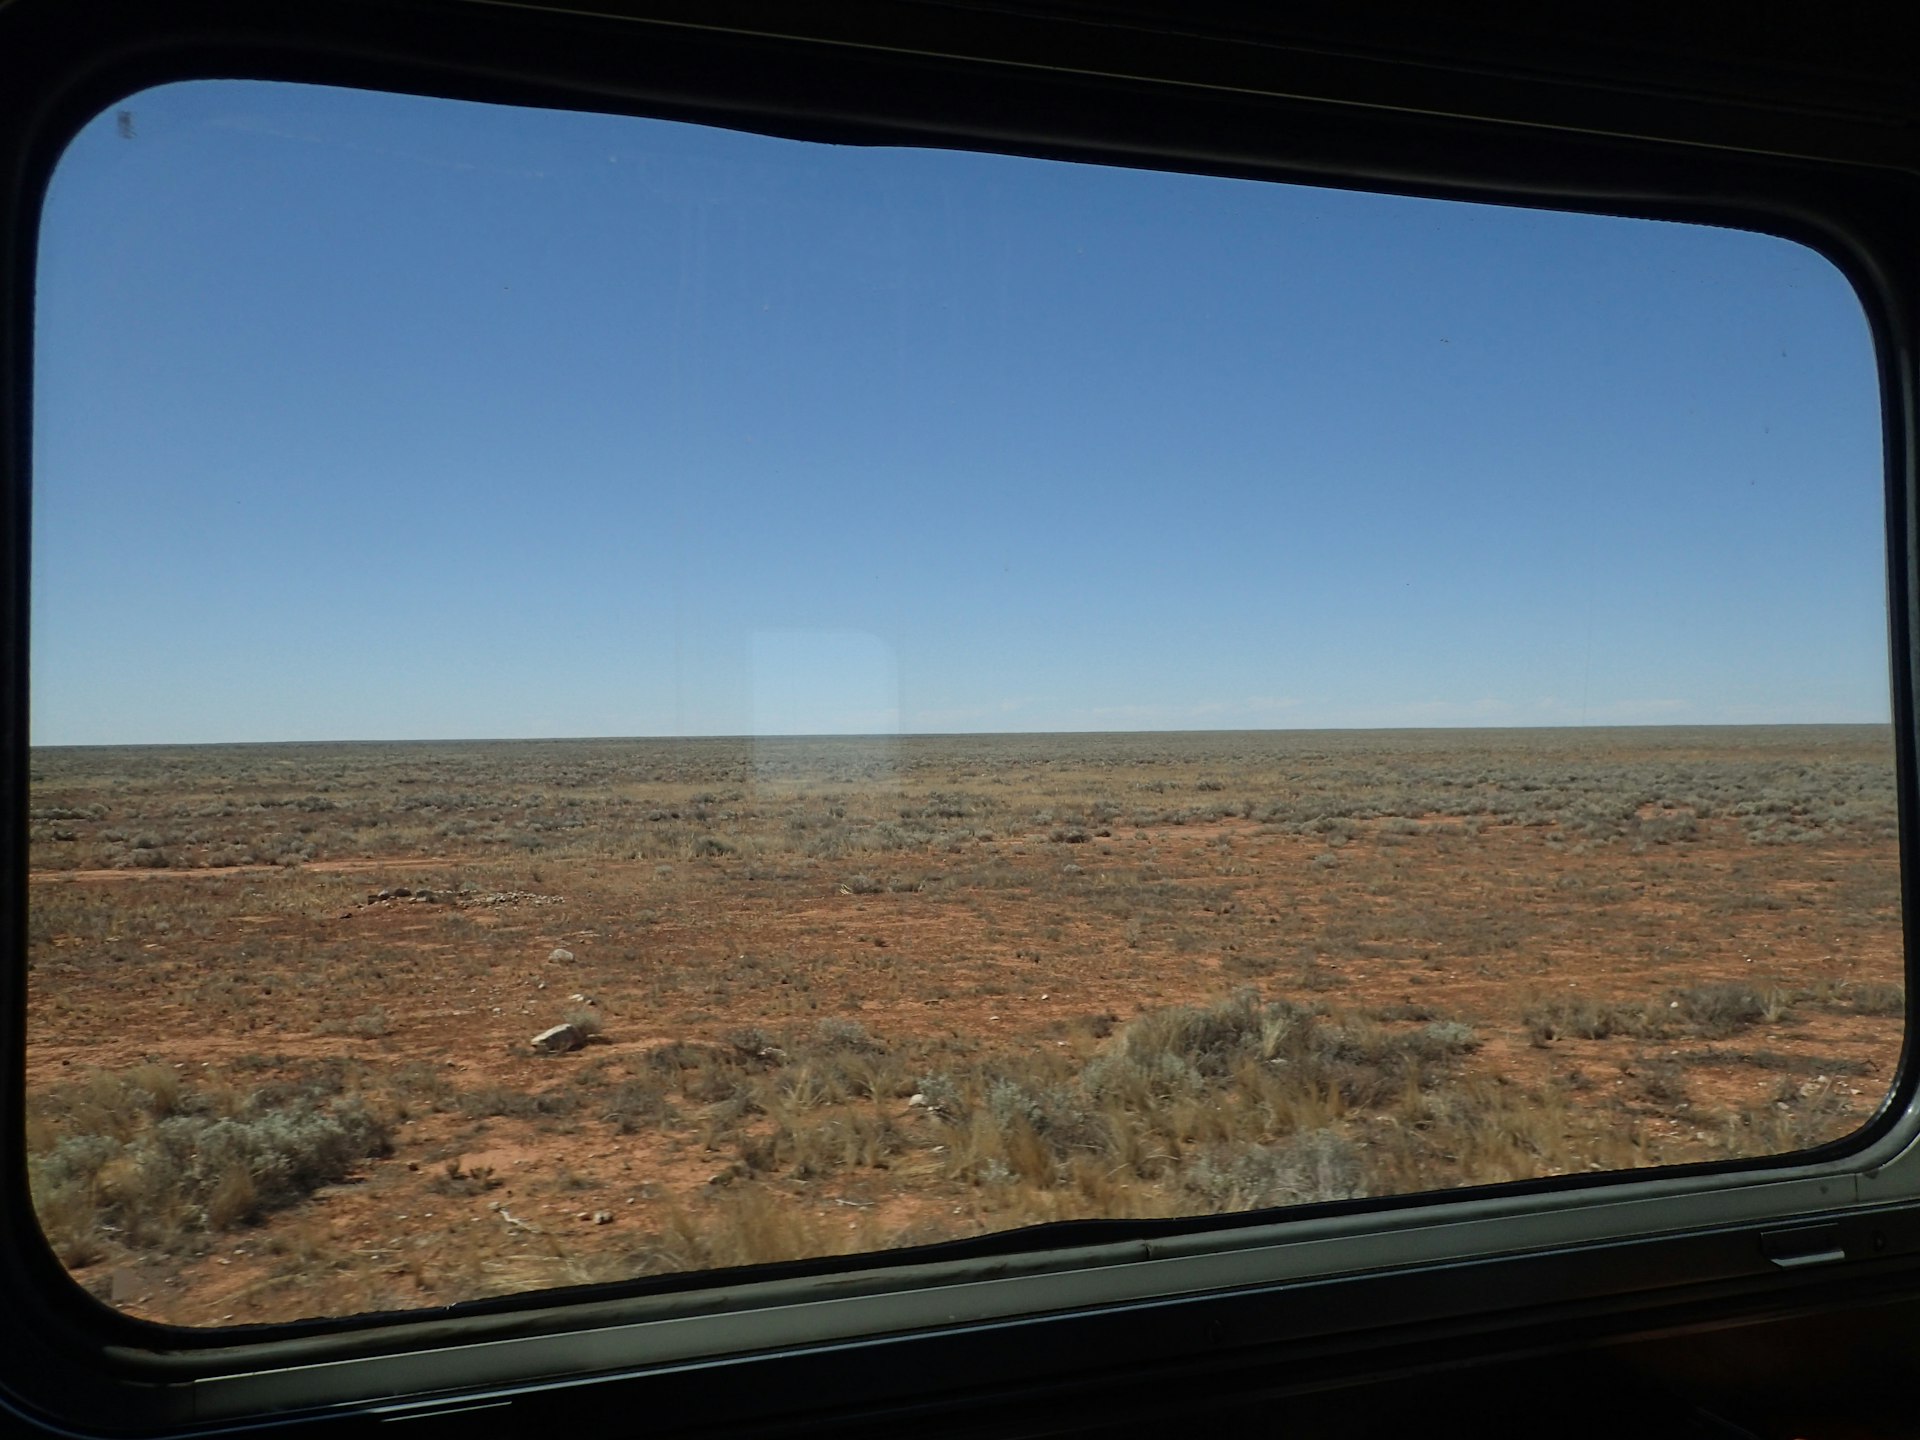  Nullarbor Plain in Western Australia 